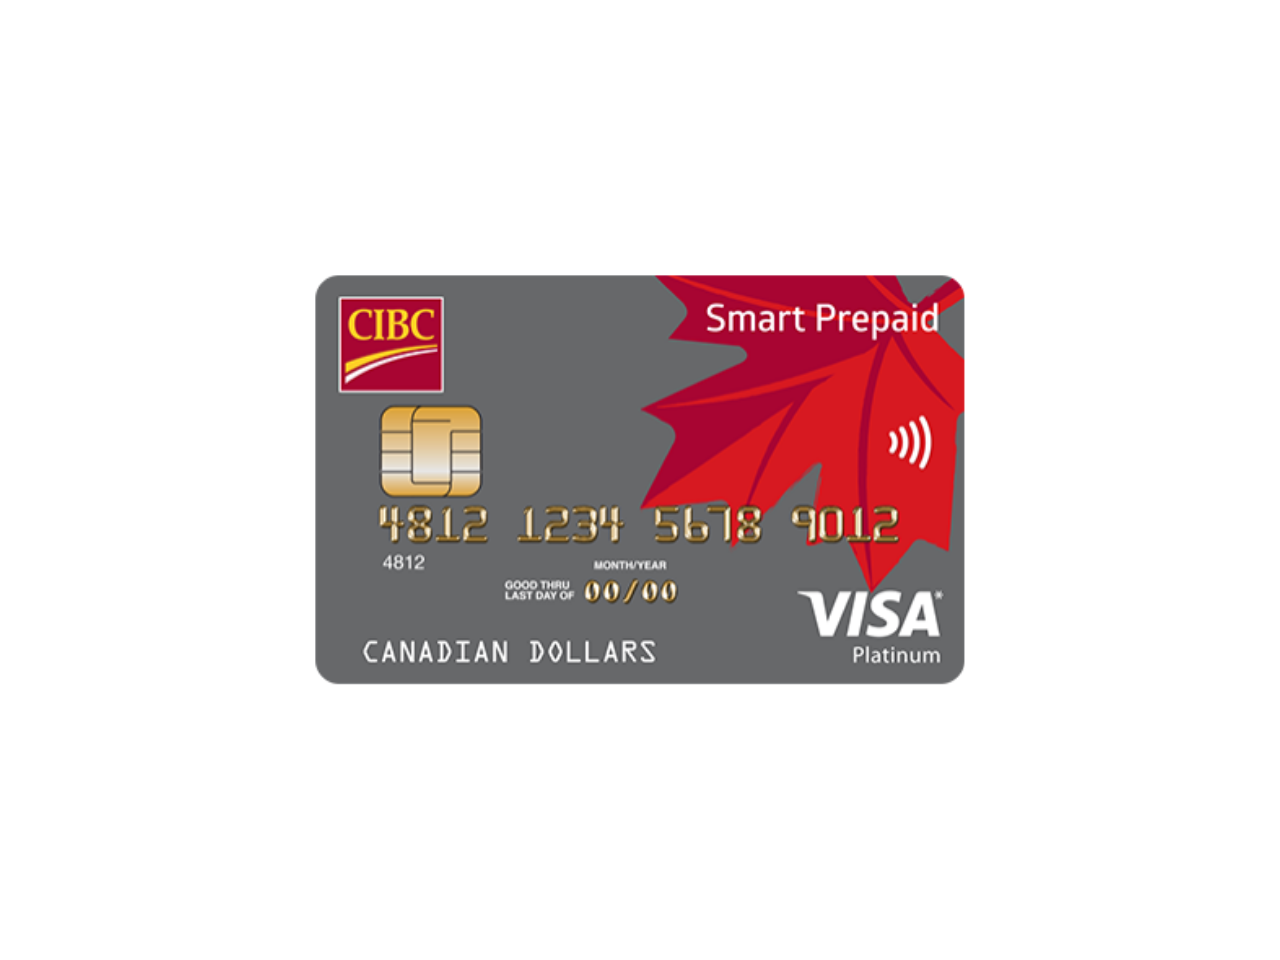 CIBC Smart Prepaid Visa Card Review